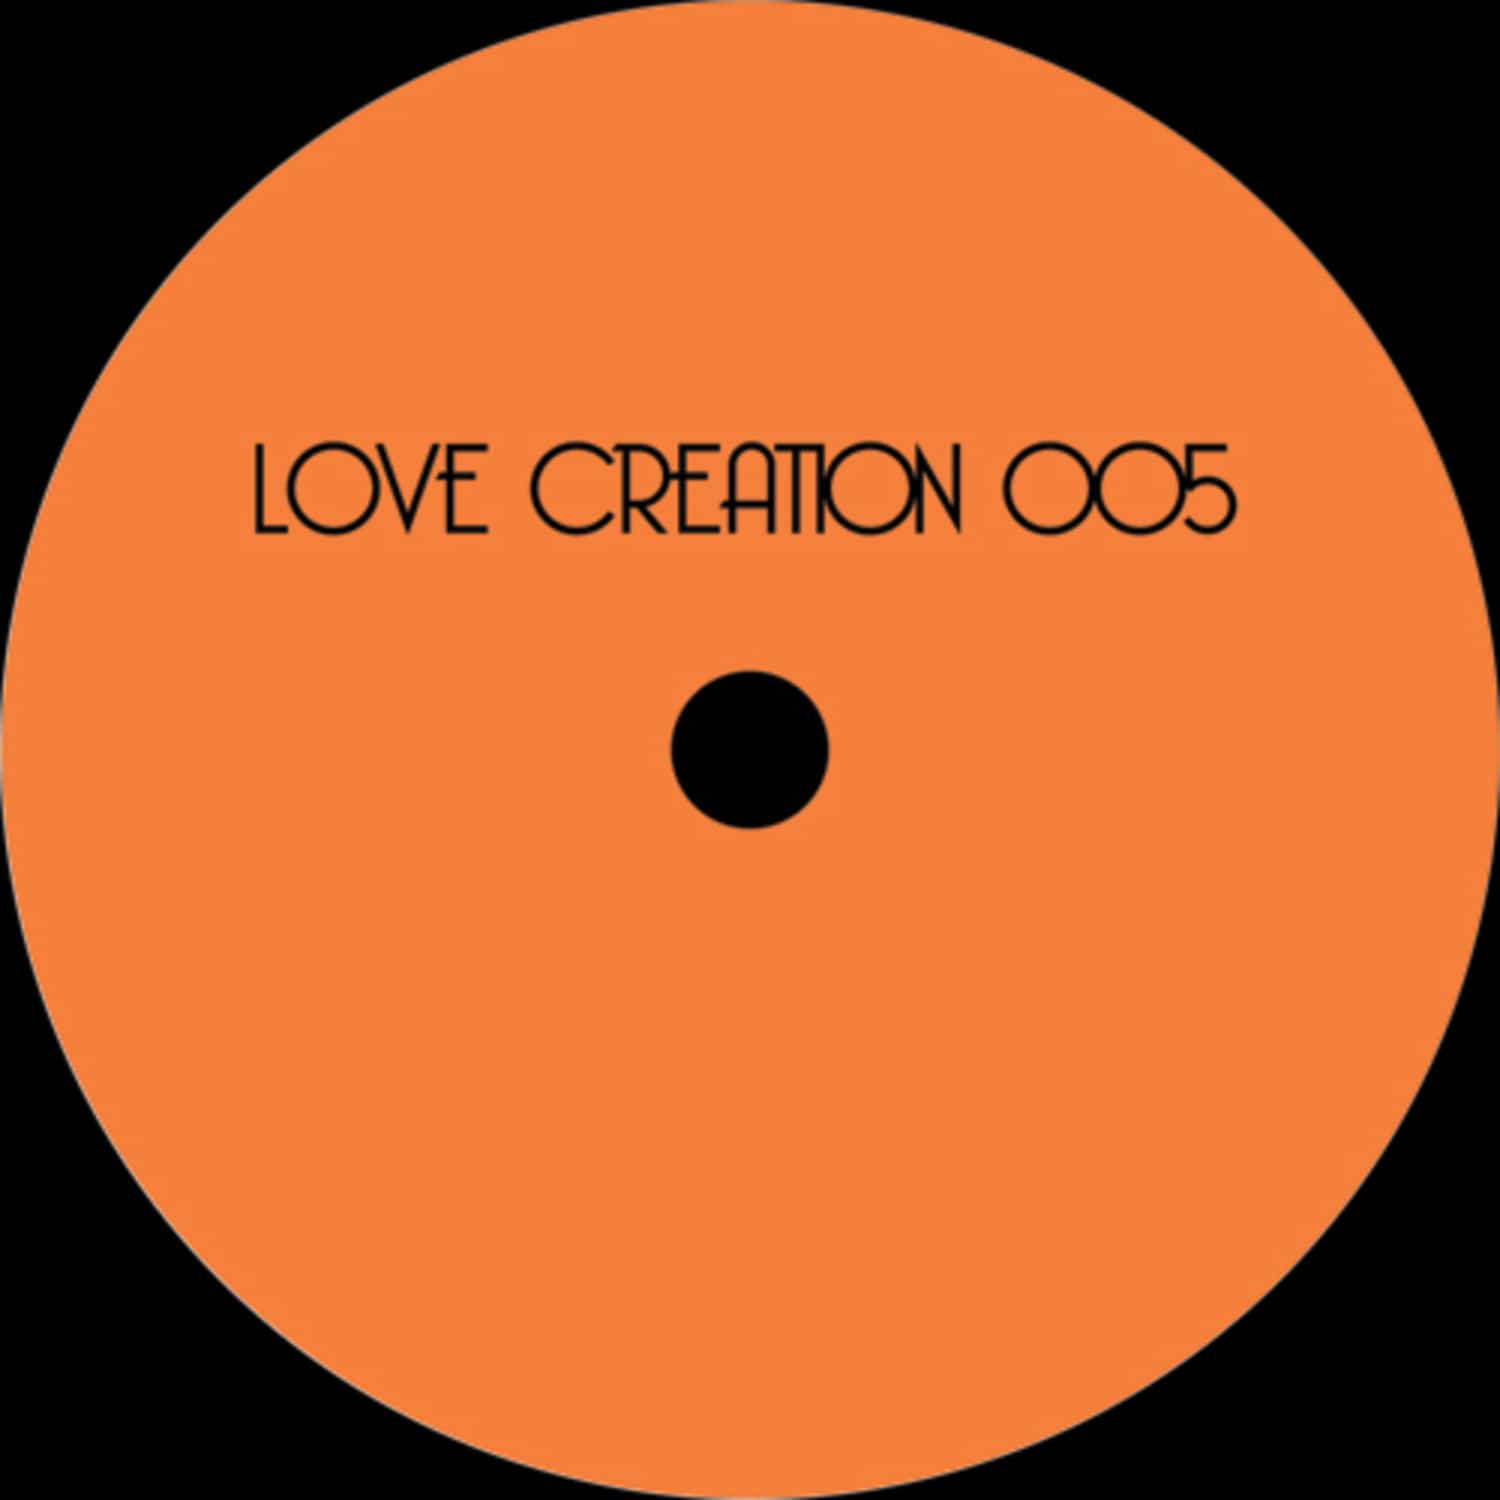 Love Creation - LOVE CREATION 005